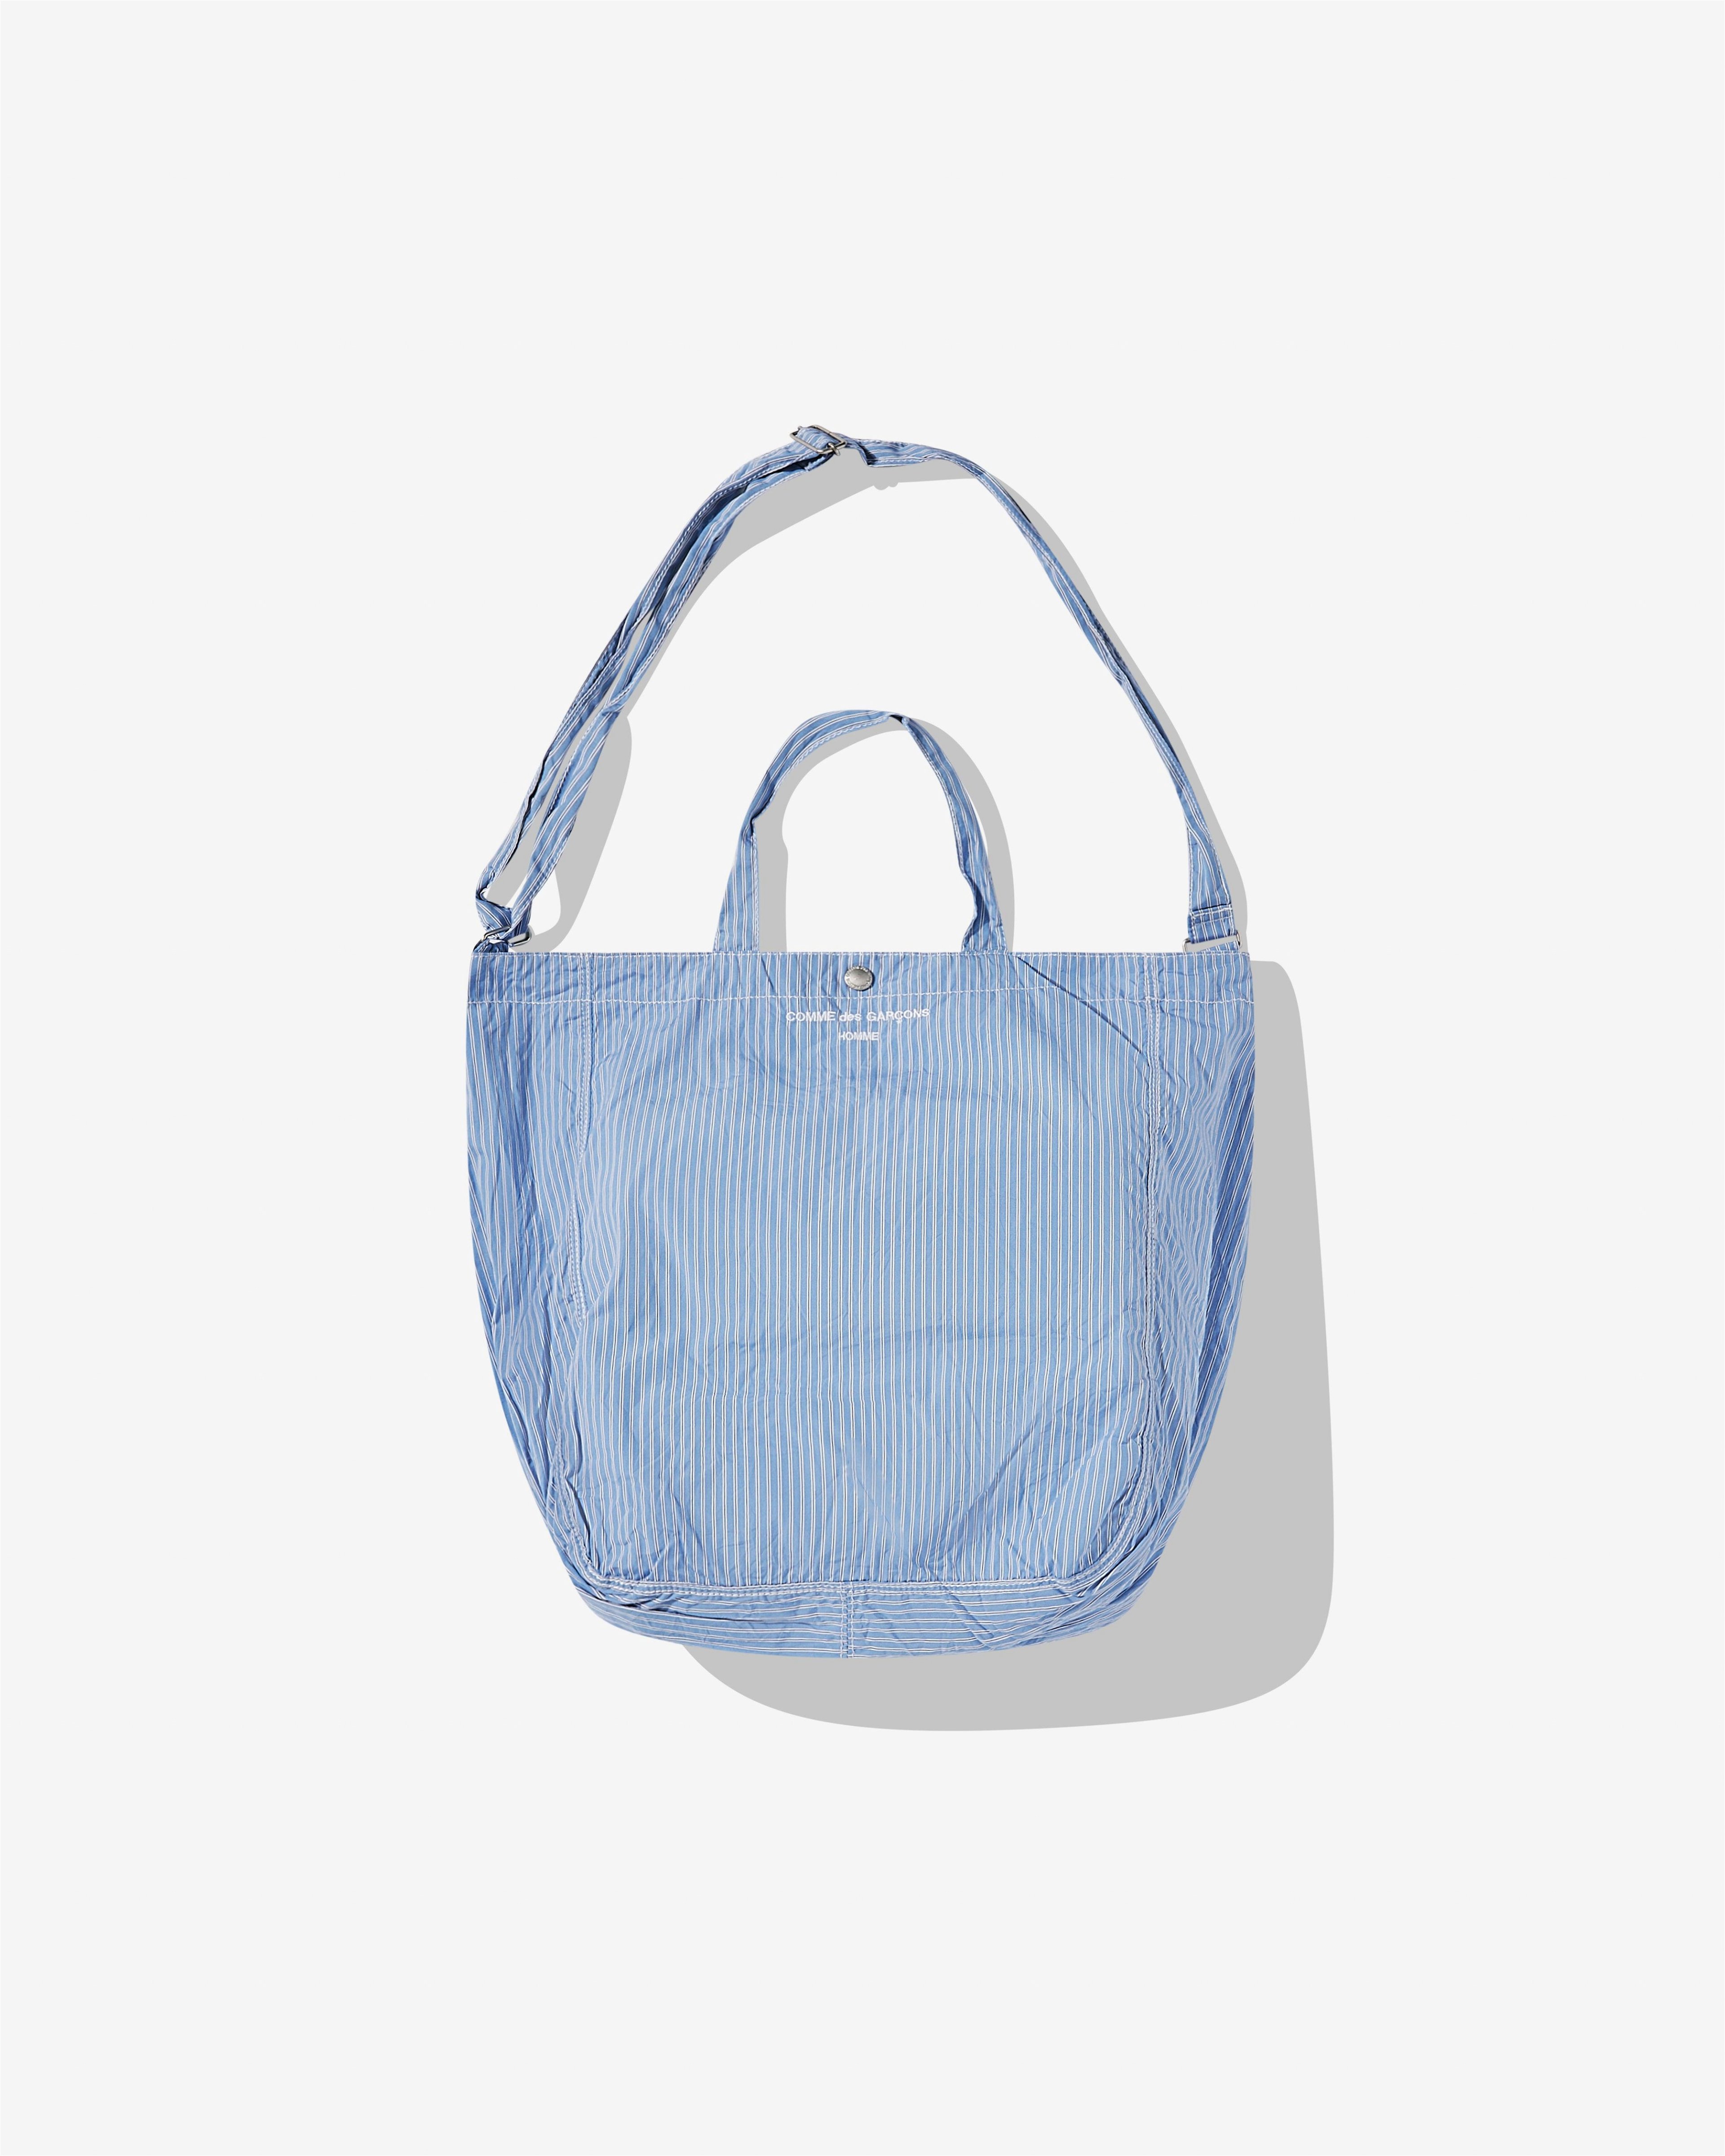 Comme des Garçons Homme - Cotton Tote Bag - (Blue/White) by CDG HOMME